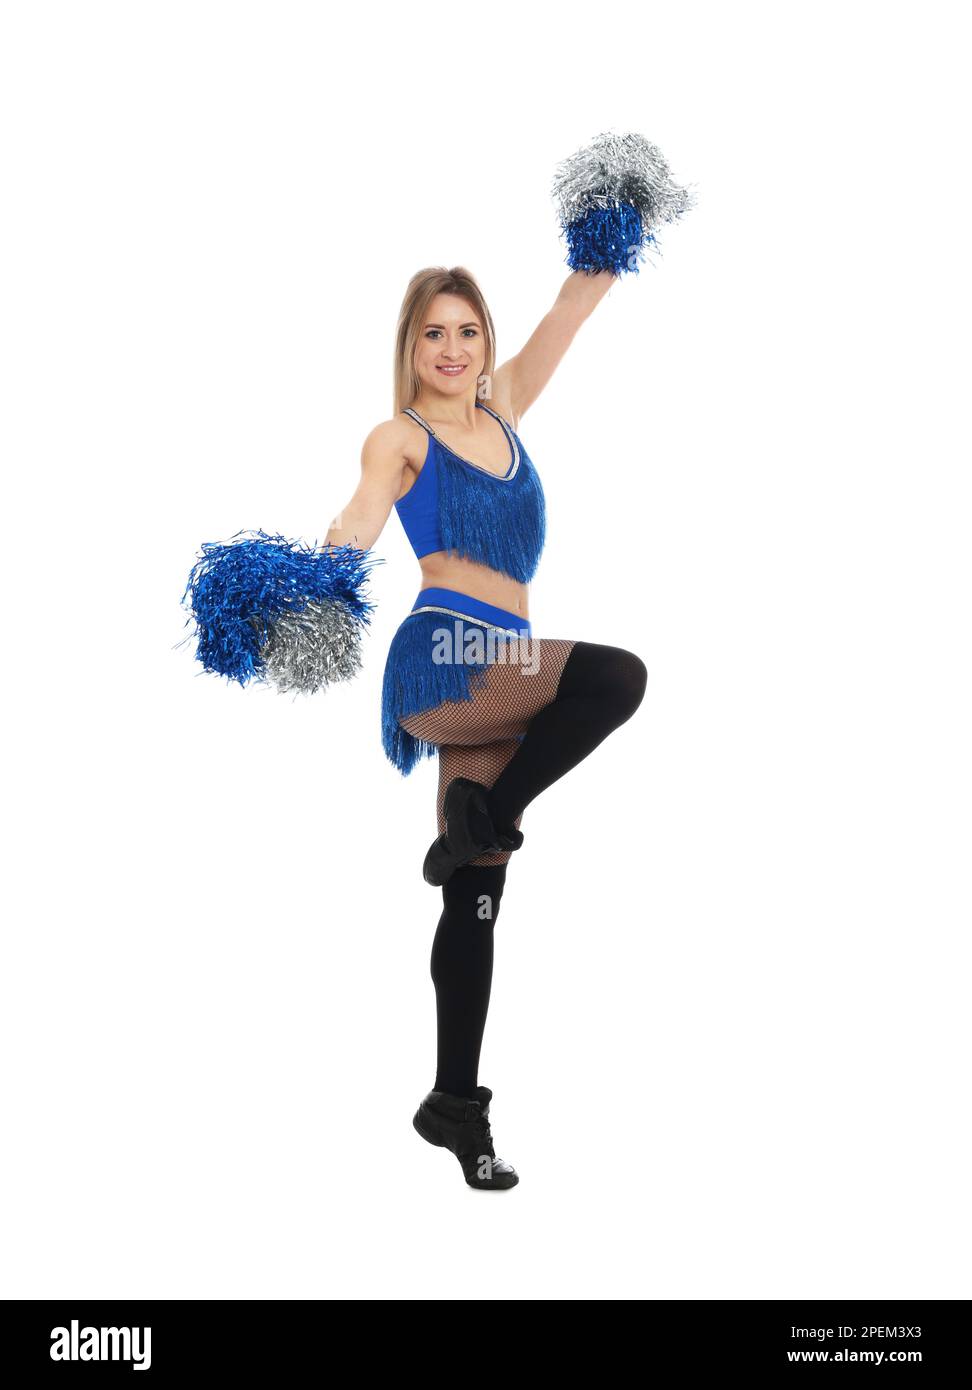 Cheerleaders in Uniform Holding Pom-Poms Stock Photo - Alamy